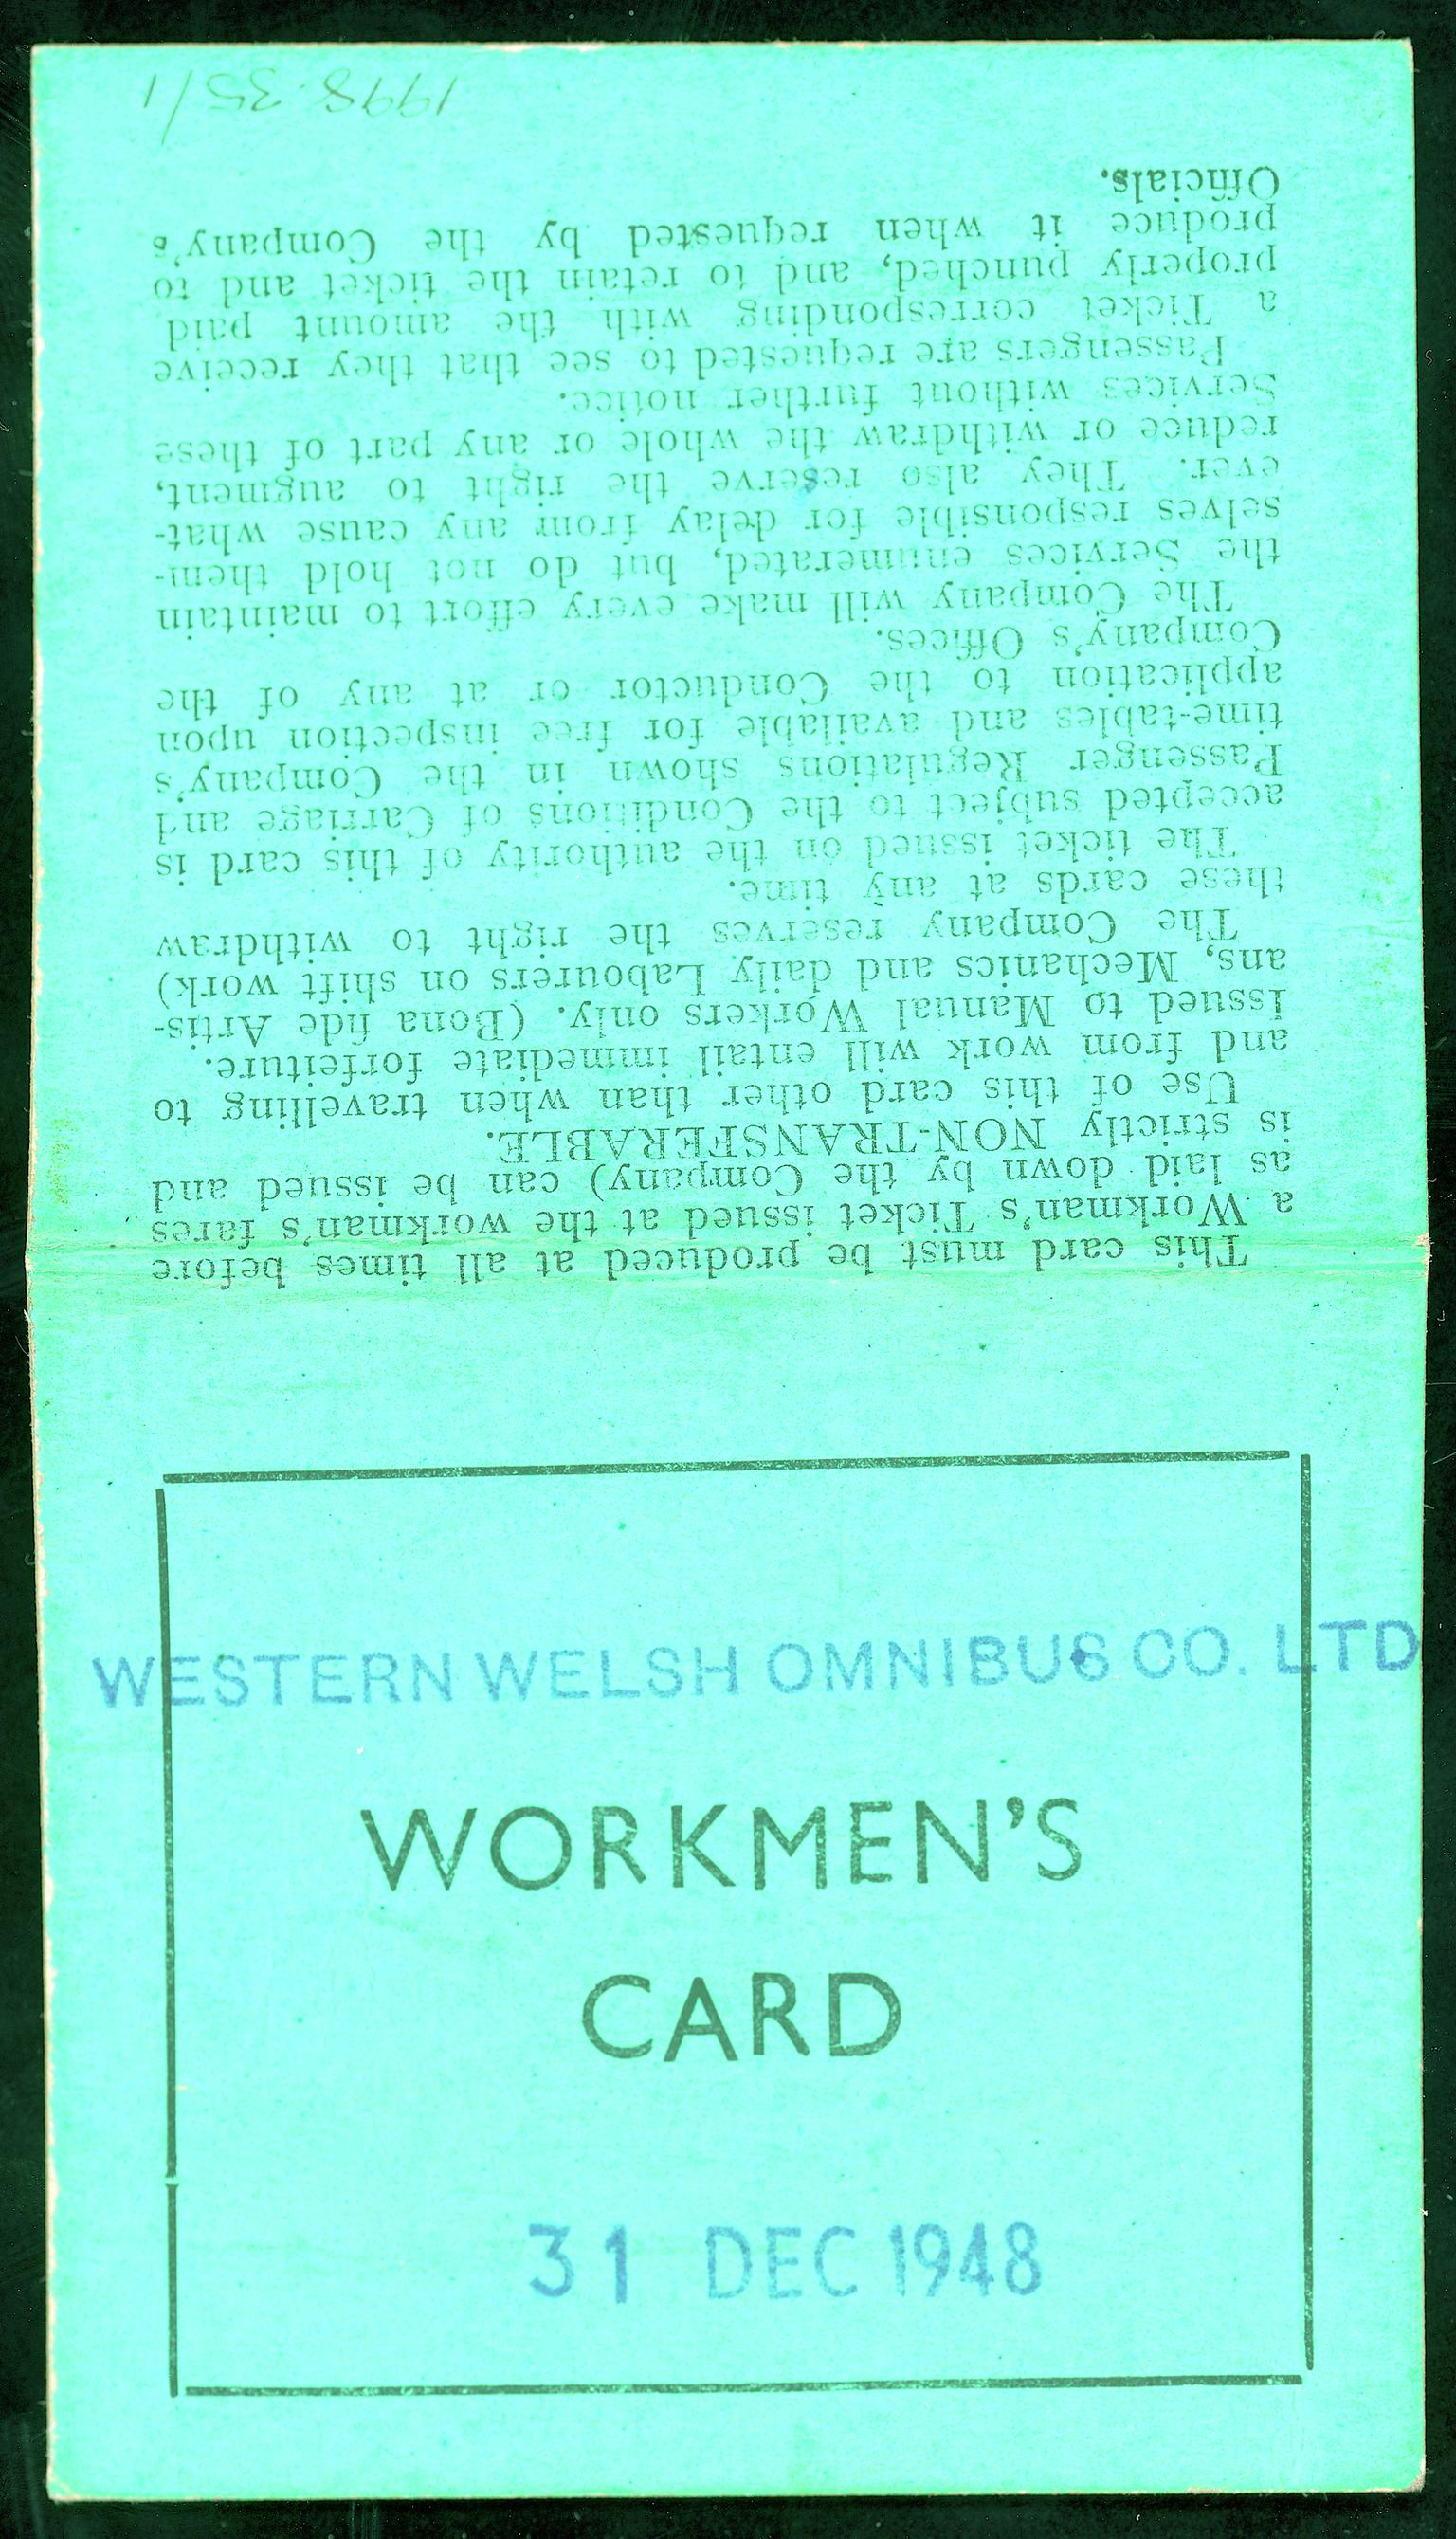 Western Welsh Omnibus Co. Ltd. workman's bus pass